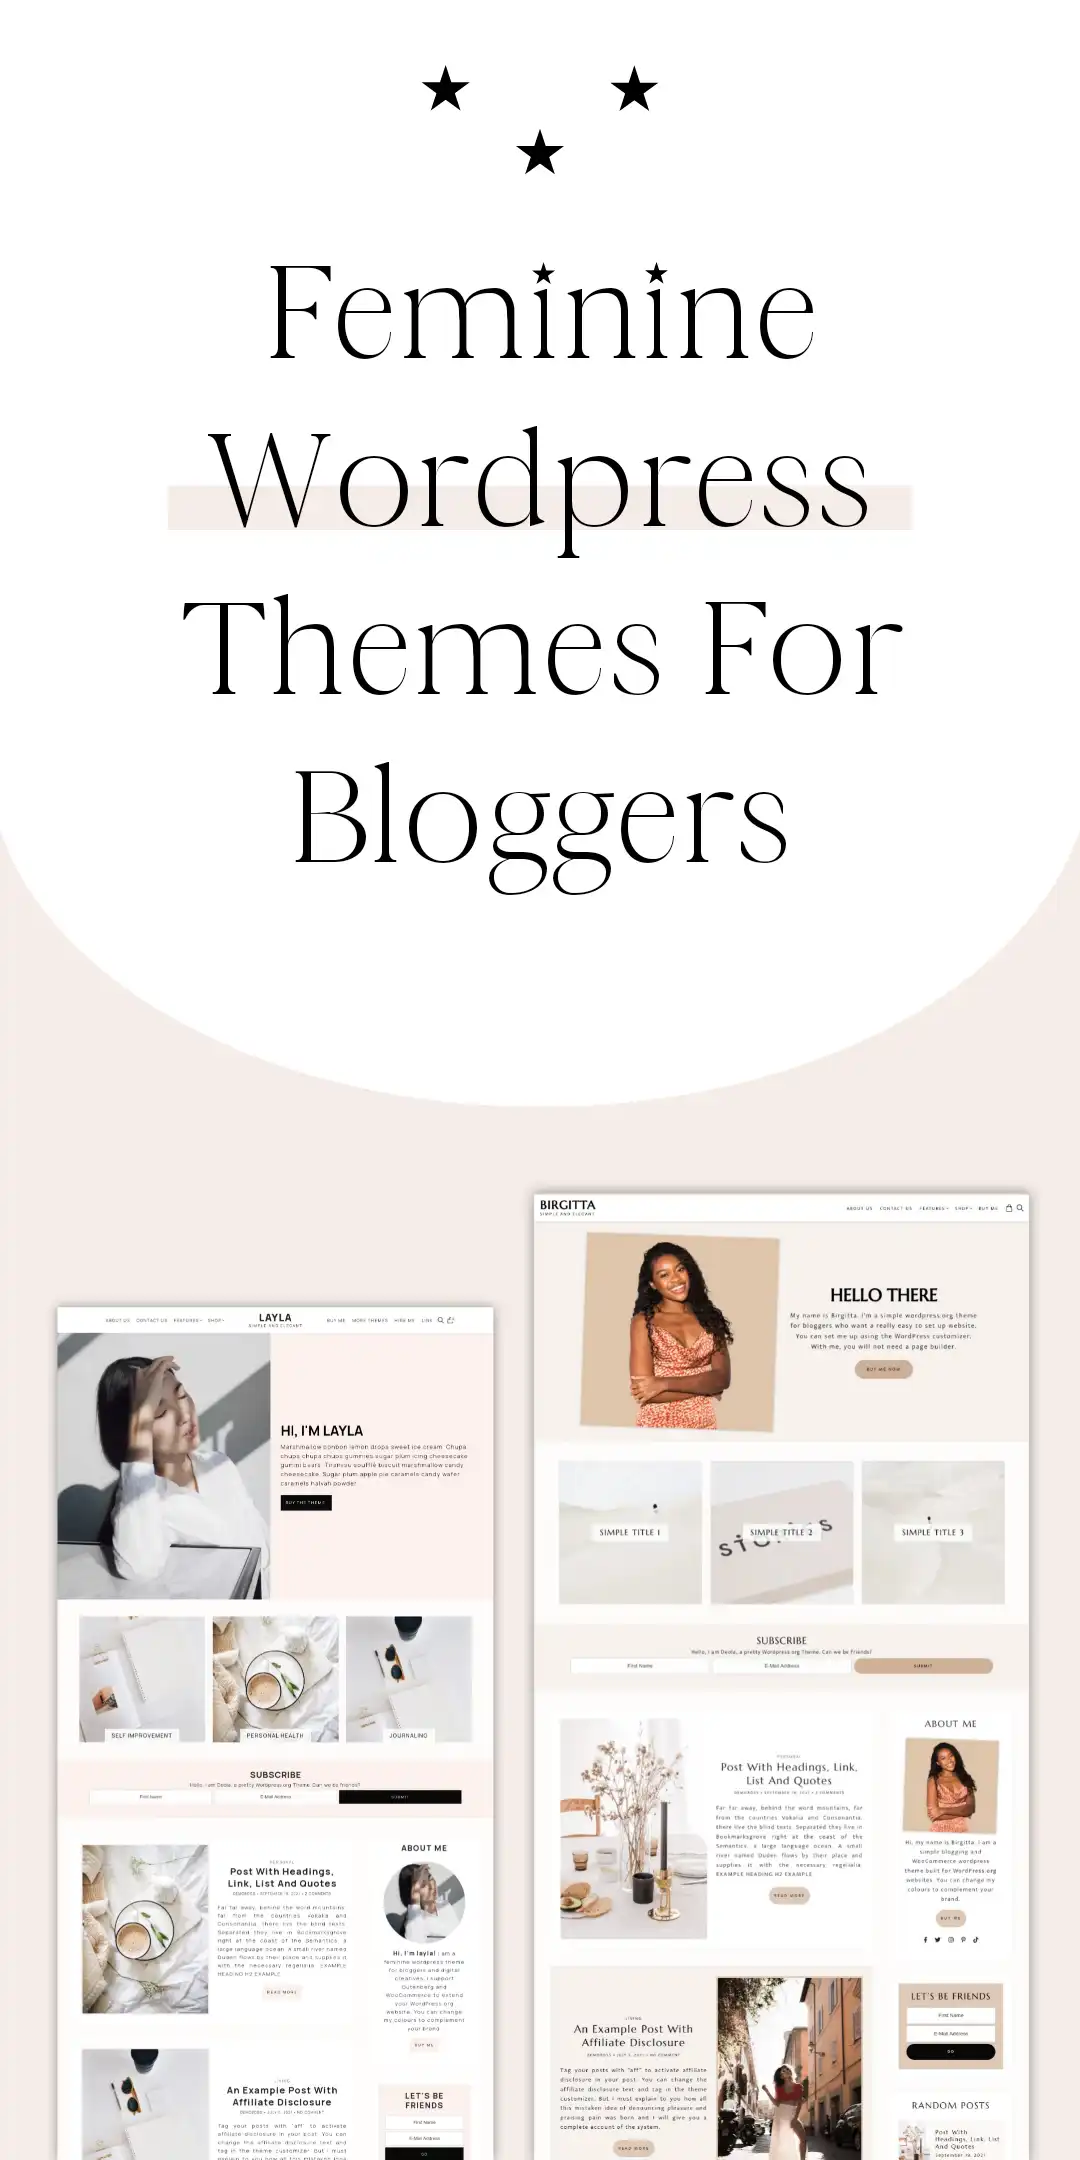 Feminine WordPress themes for bloggers